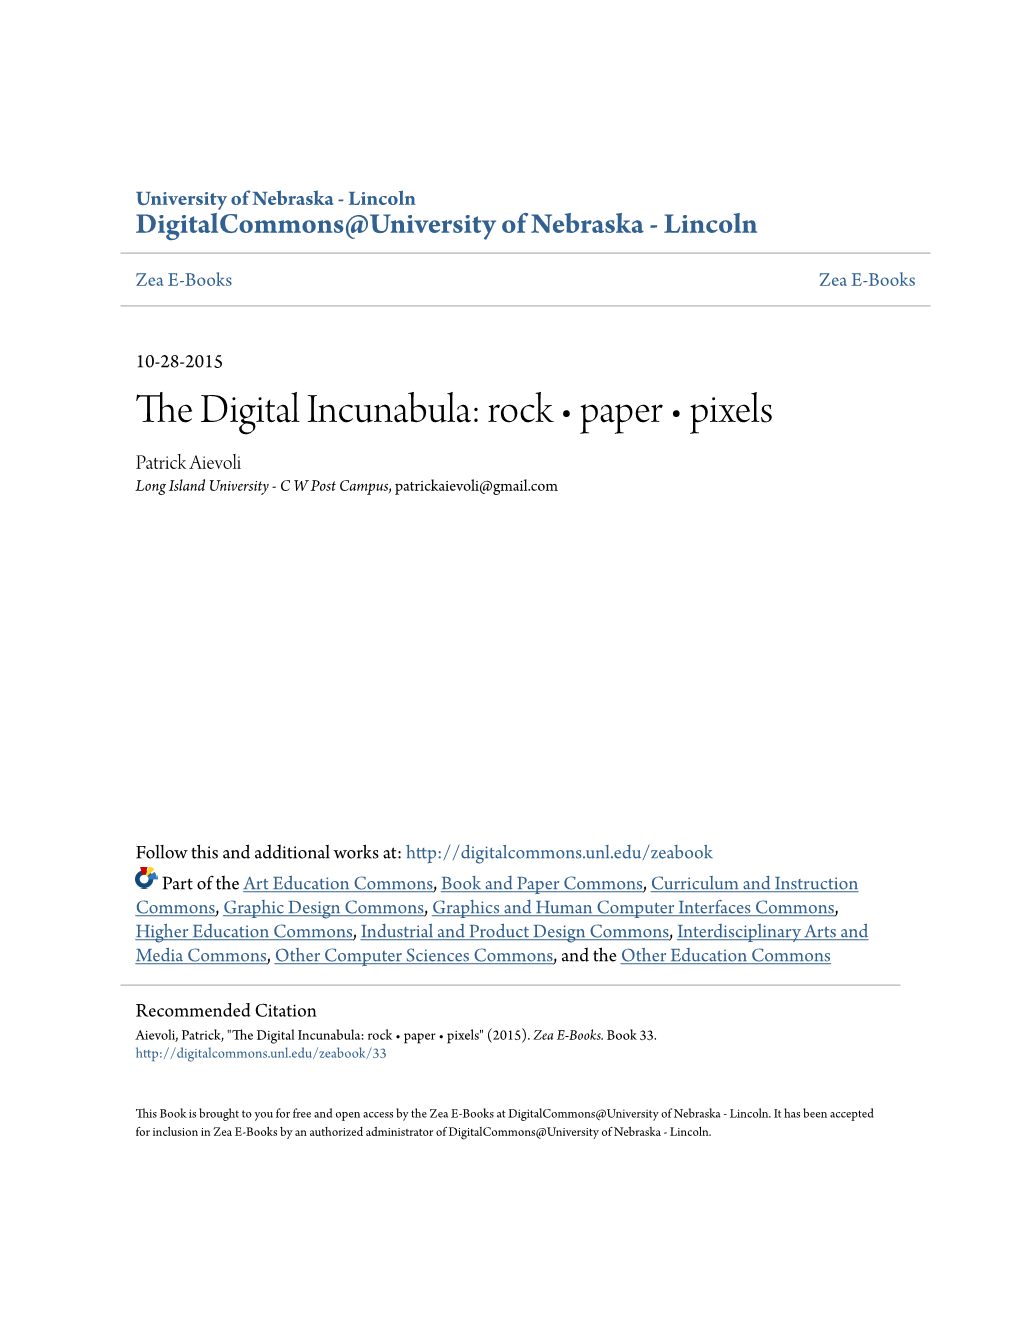 The Digital Incunabula: Rock • Paper • Pixels Patrick Aievoli Long Island University - C W Post Campus, Patrickaievoli@Gmail.Com